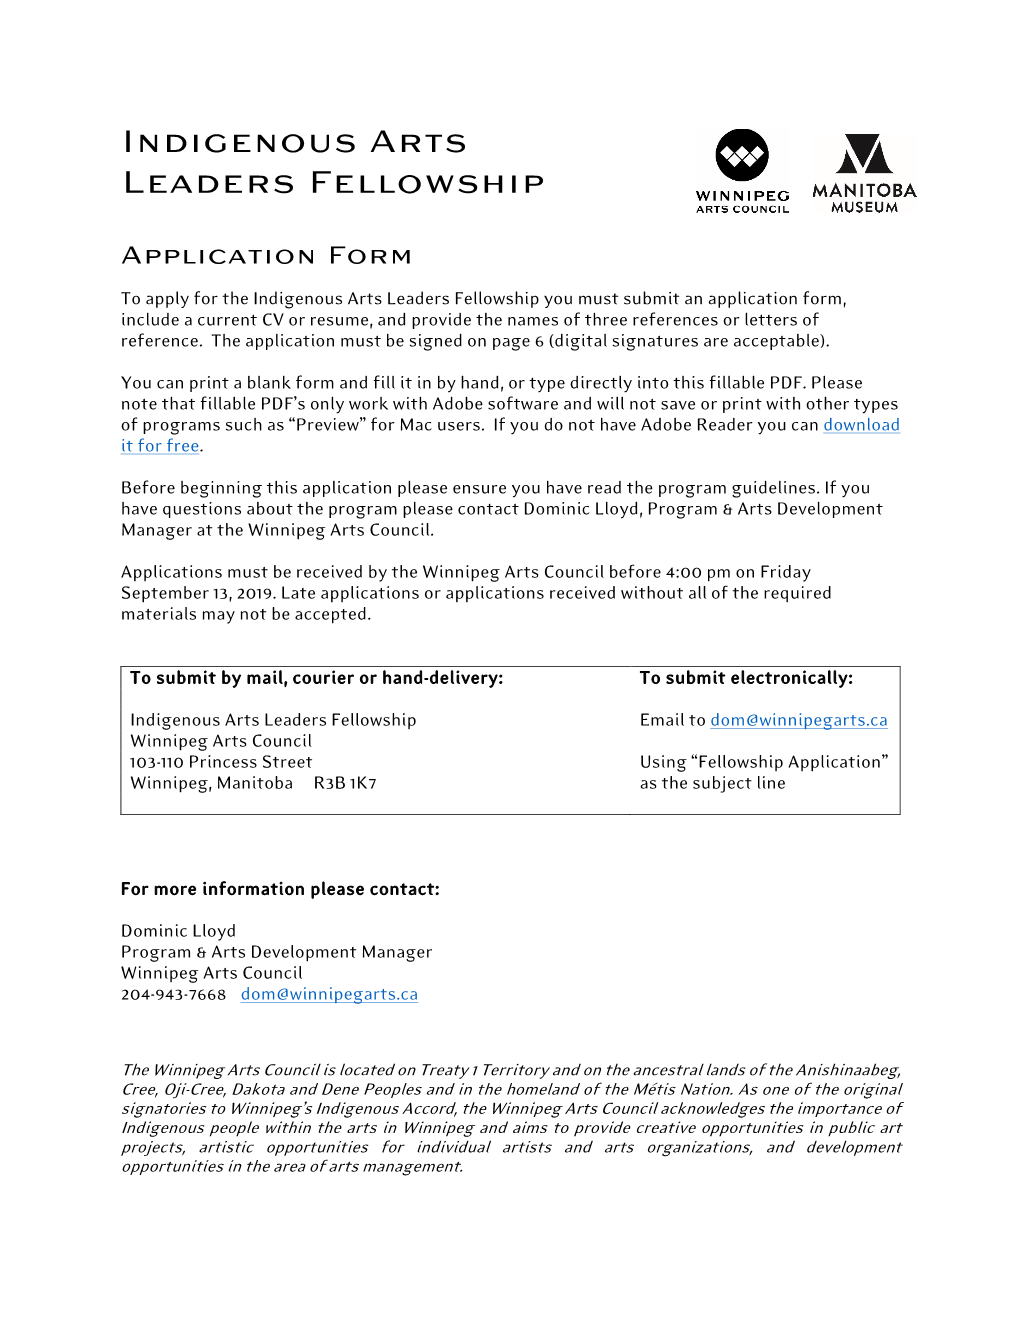 Indigenous Arts Leaders Fellowship